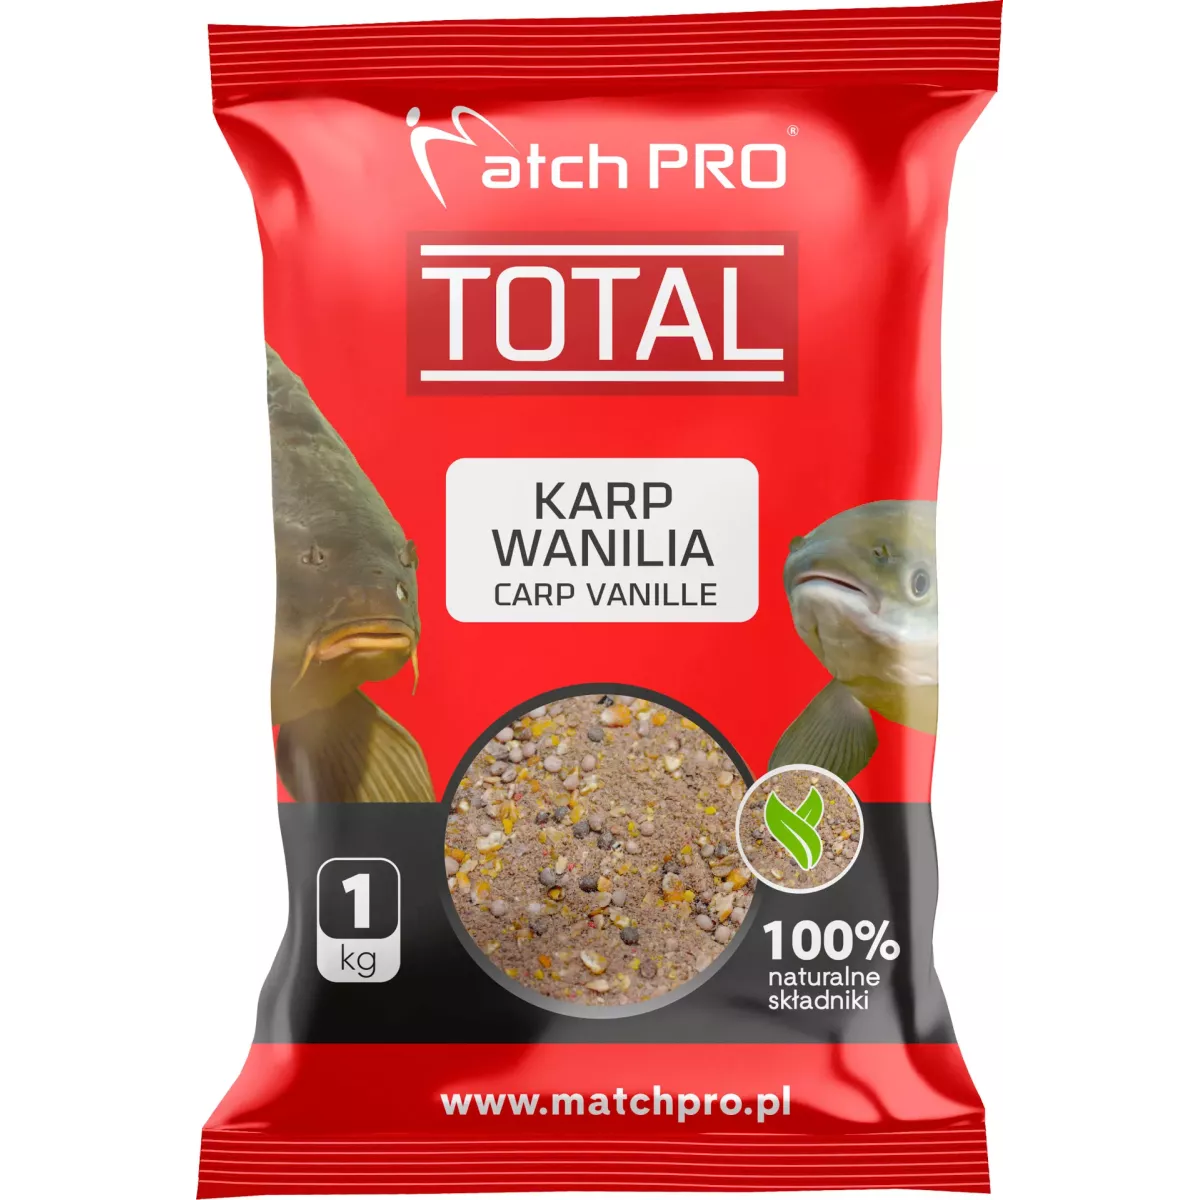 Zanęta MatchPro Total 1kg - KARP WANILIA